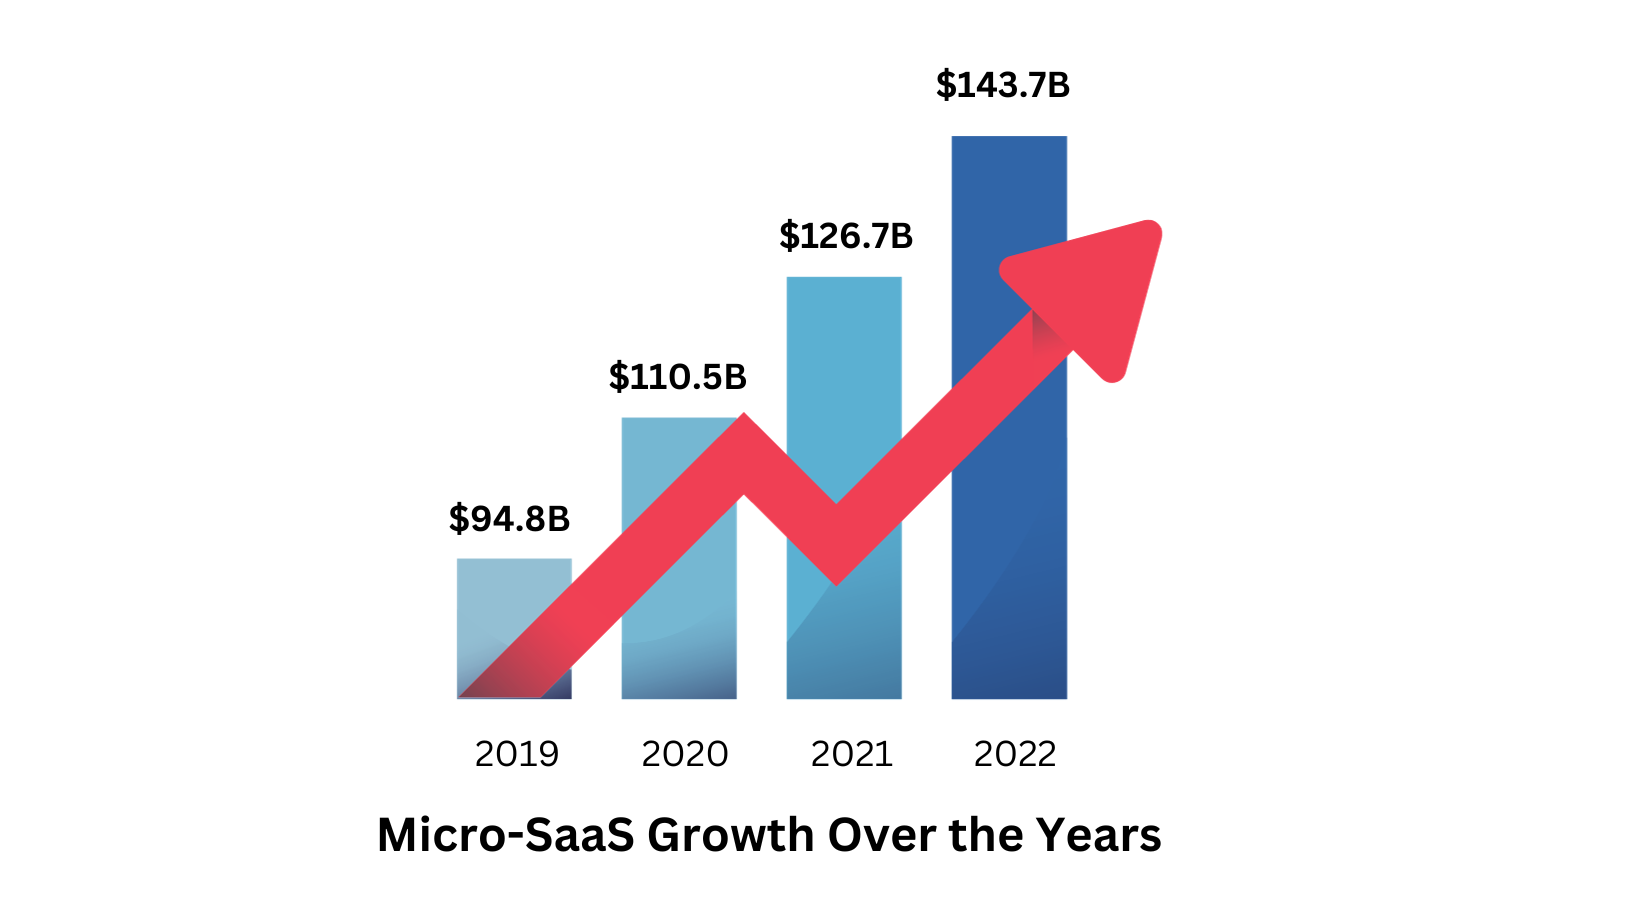 Micro-SaaS growth over the years